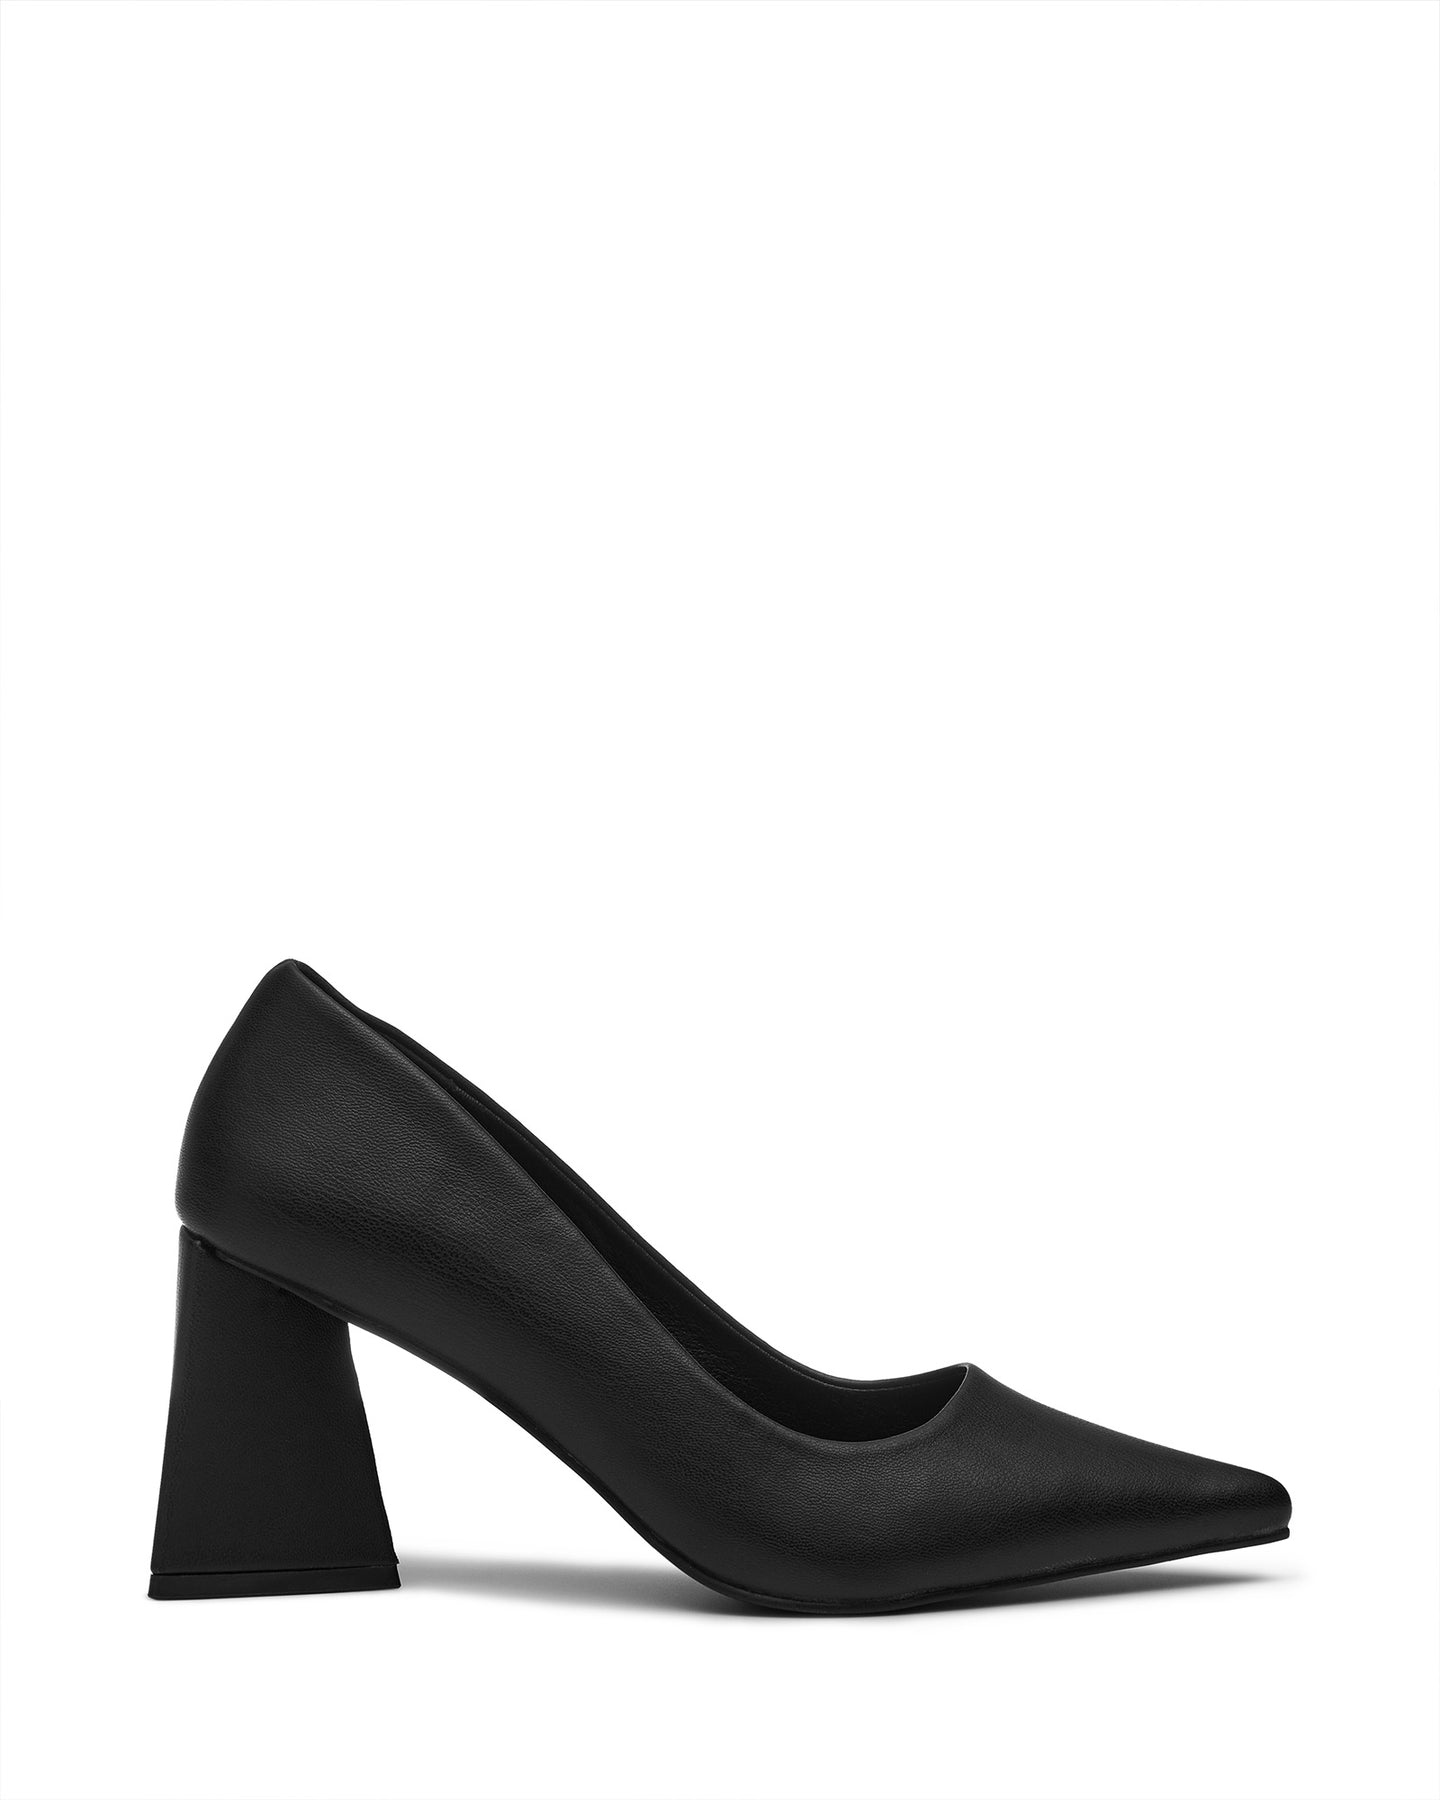 Calla Shoes | Sophia | Classic black leather heeled dress shoes